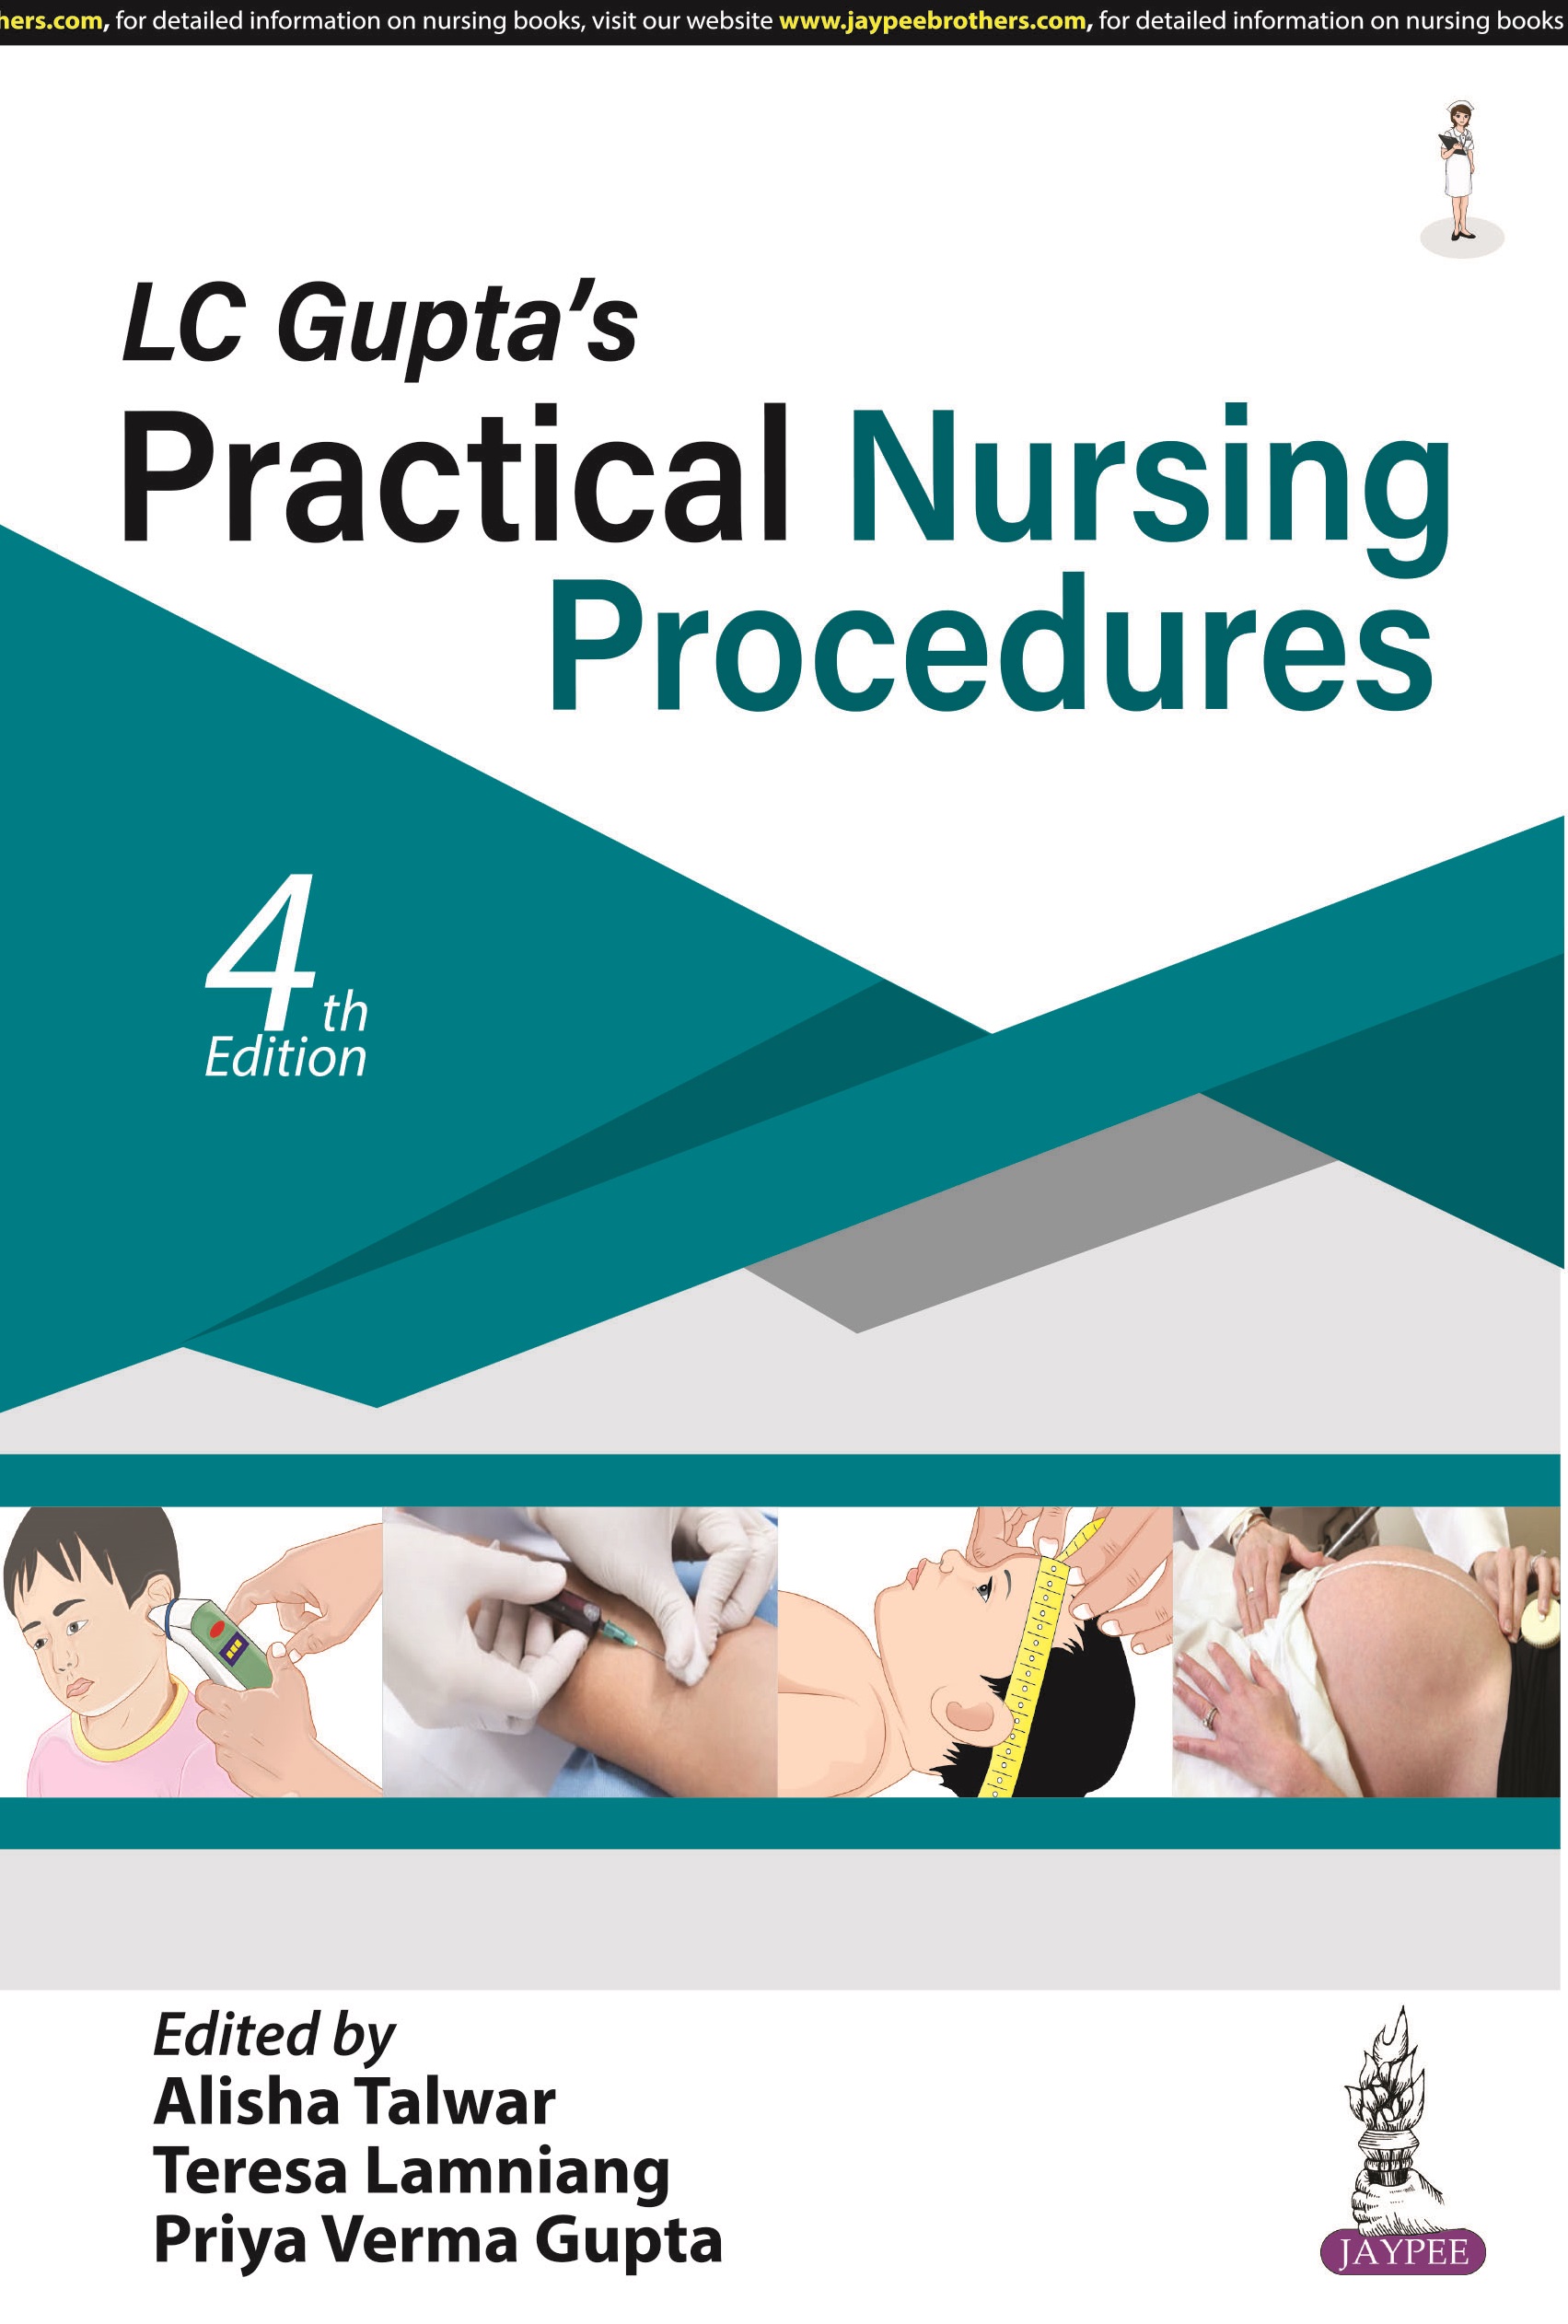 LC Gupta’s Practical Nursing Procedures